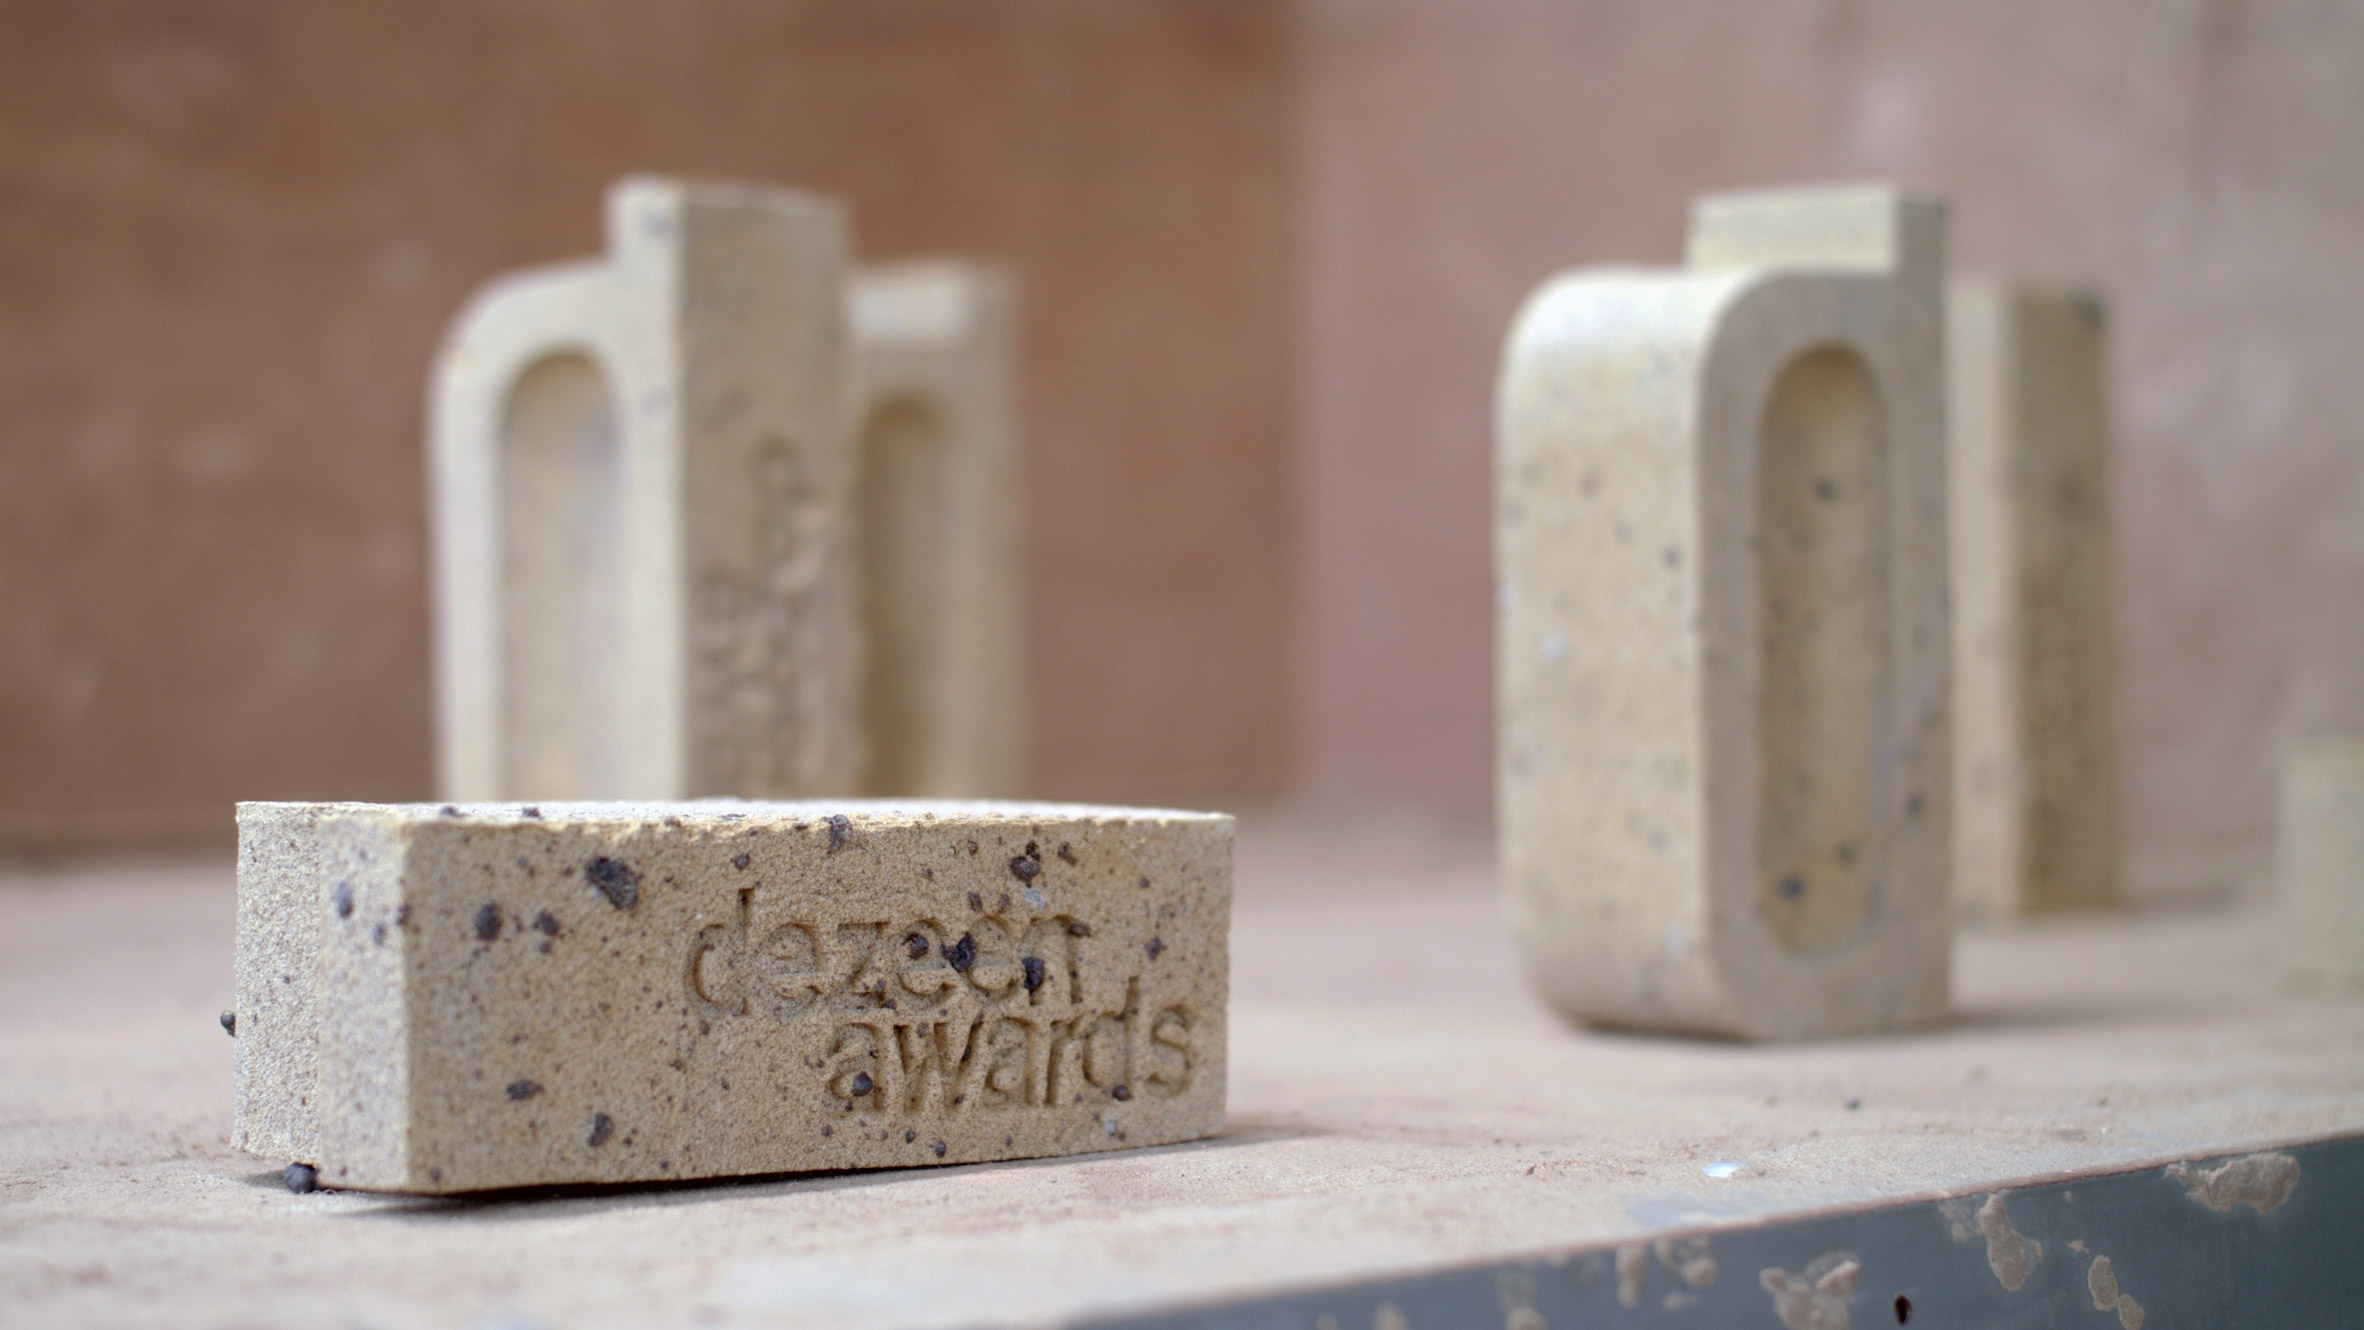 Atelier NL designed the trophy for Dezeen Awards